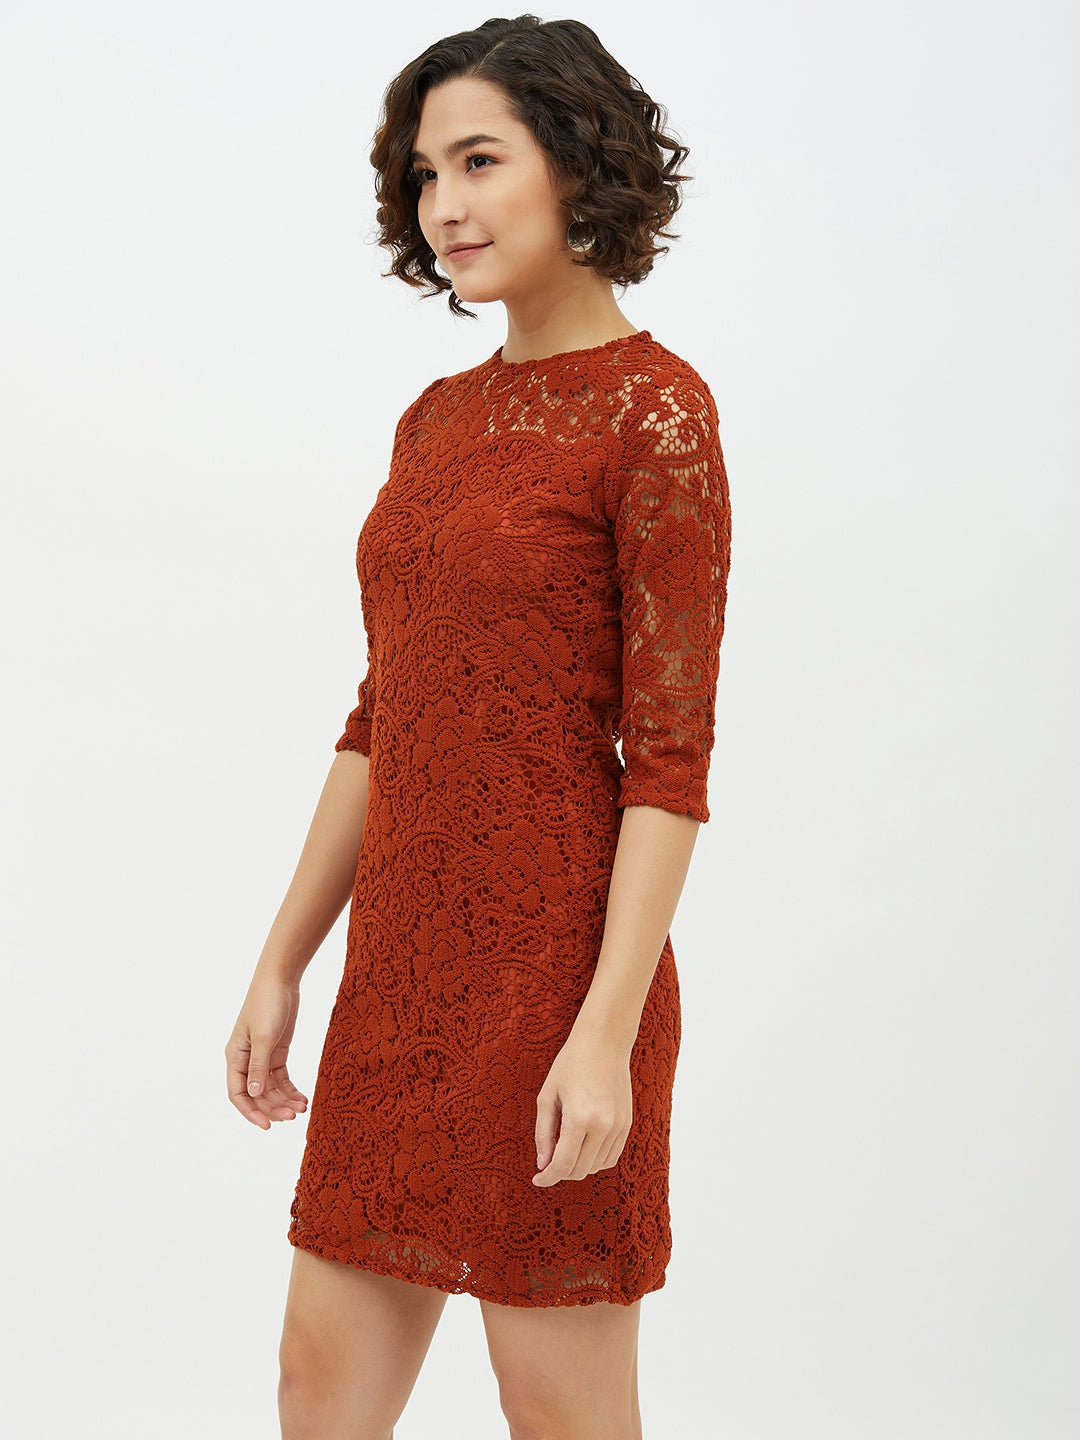 Women's Rust Lace Sheath Dress - StyleStone